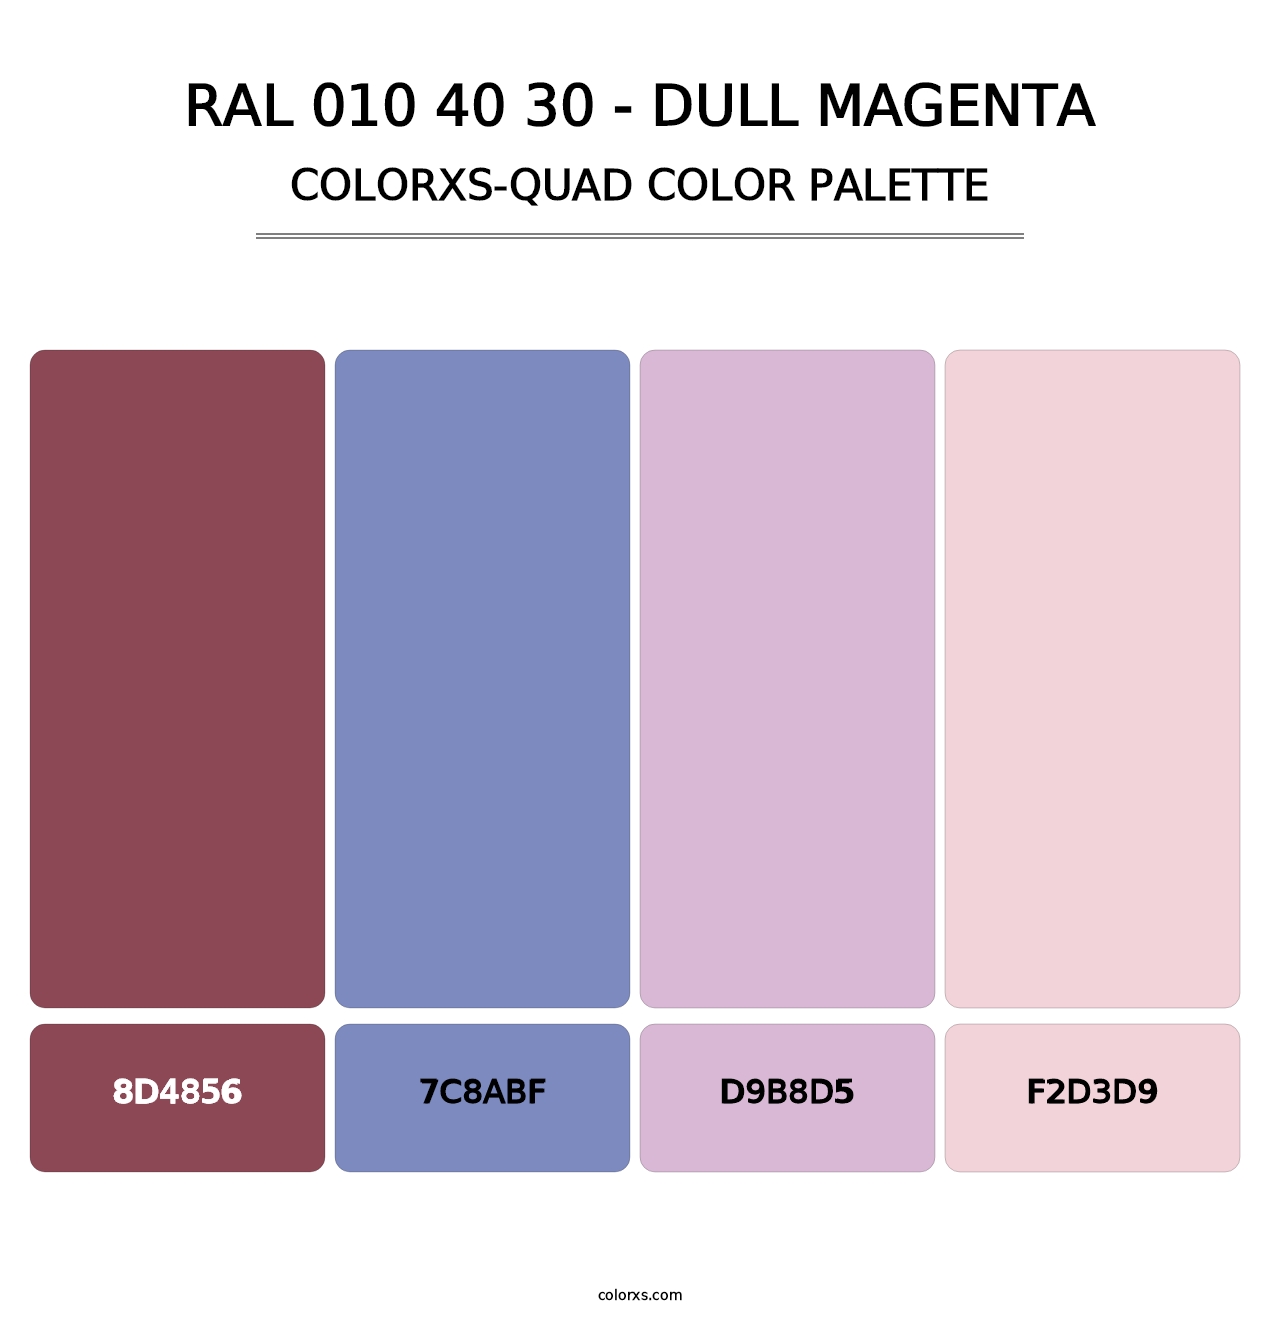 RAL 010 40 30 - Dull Magenta - Colorxs Quad Palette